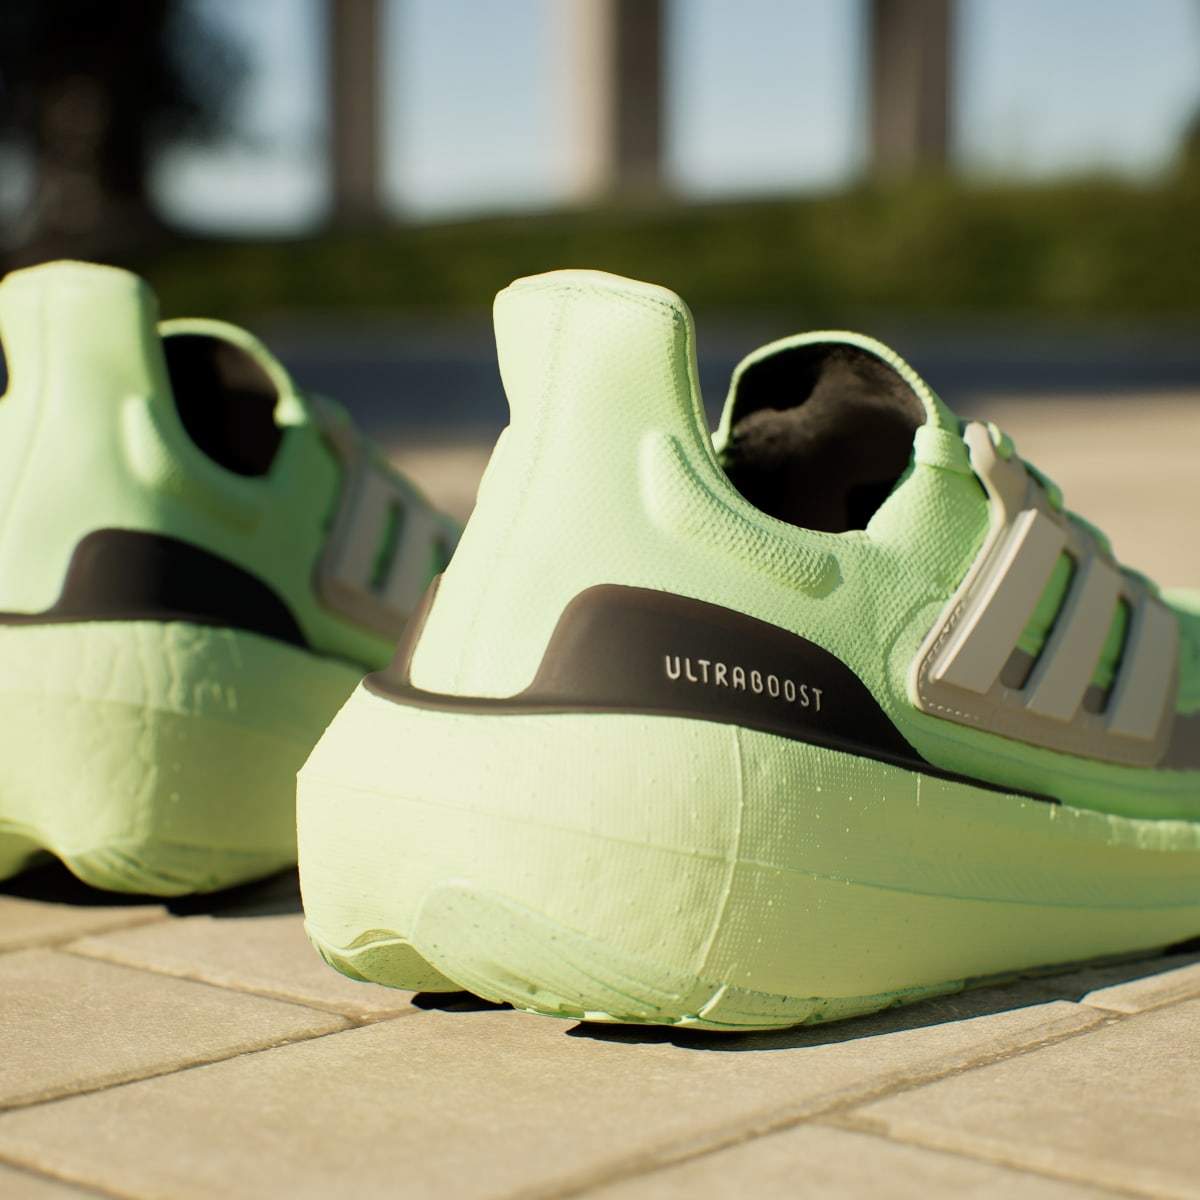 Adidas Ultraboost Light Shoes. 9